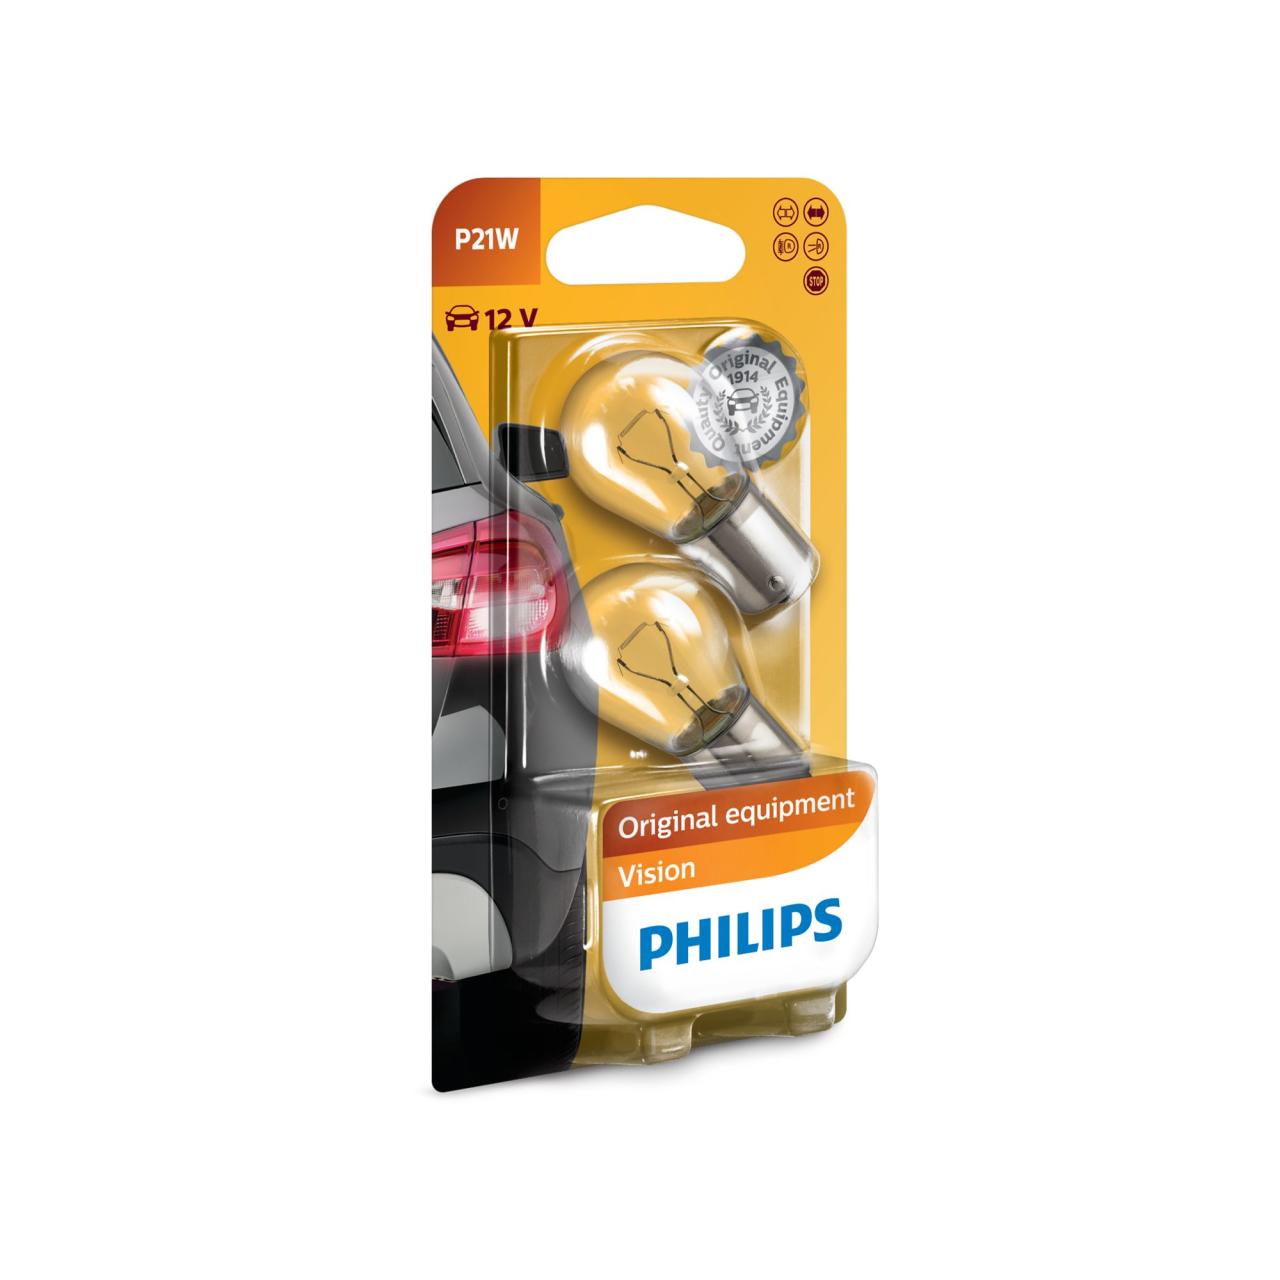 PHILIPS Vision Kugellampe P21W